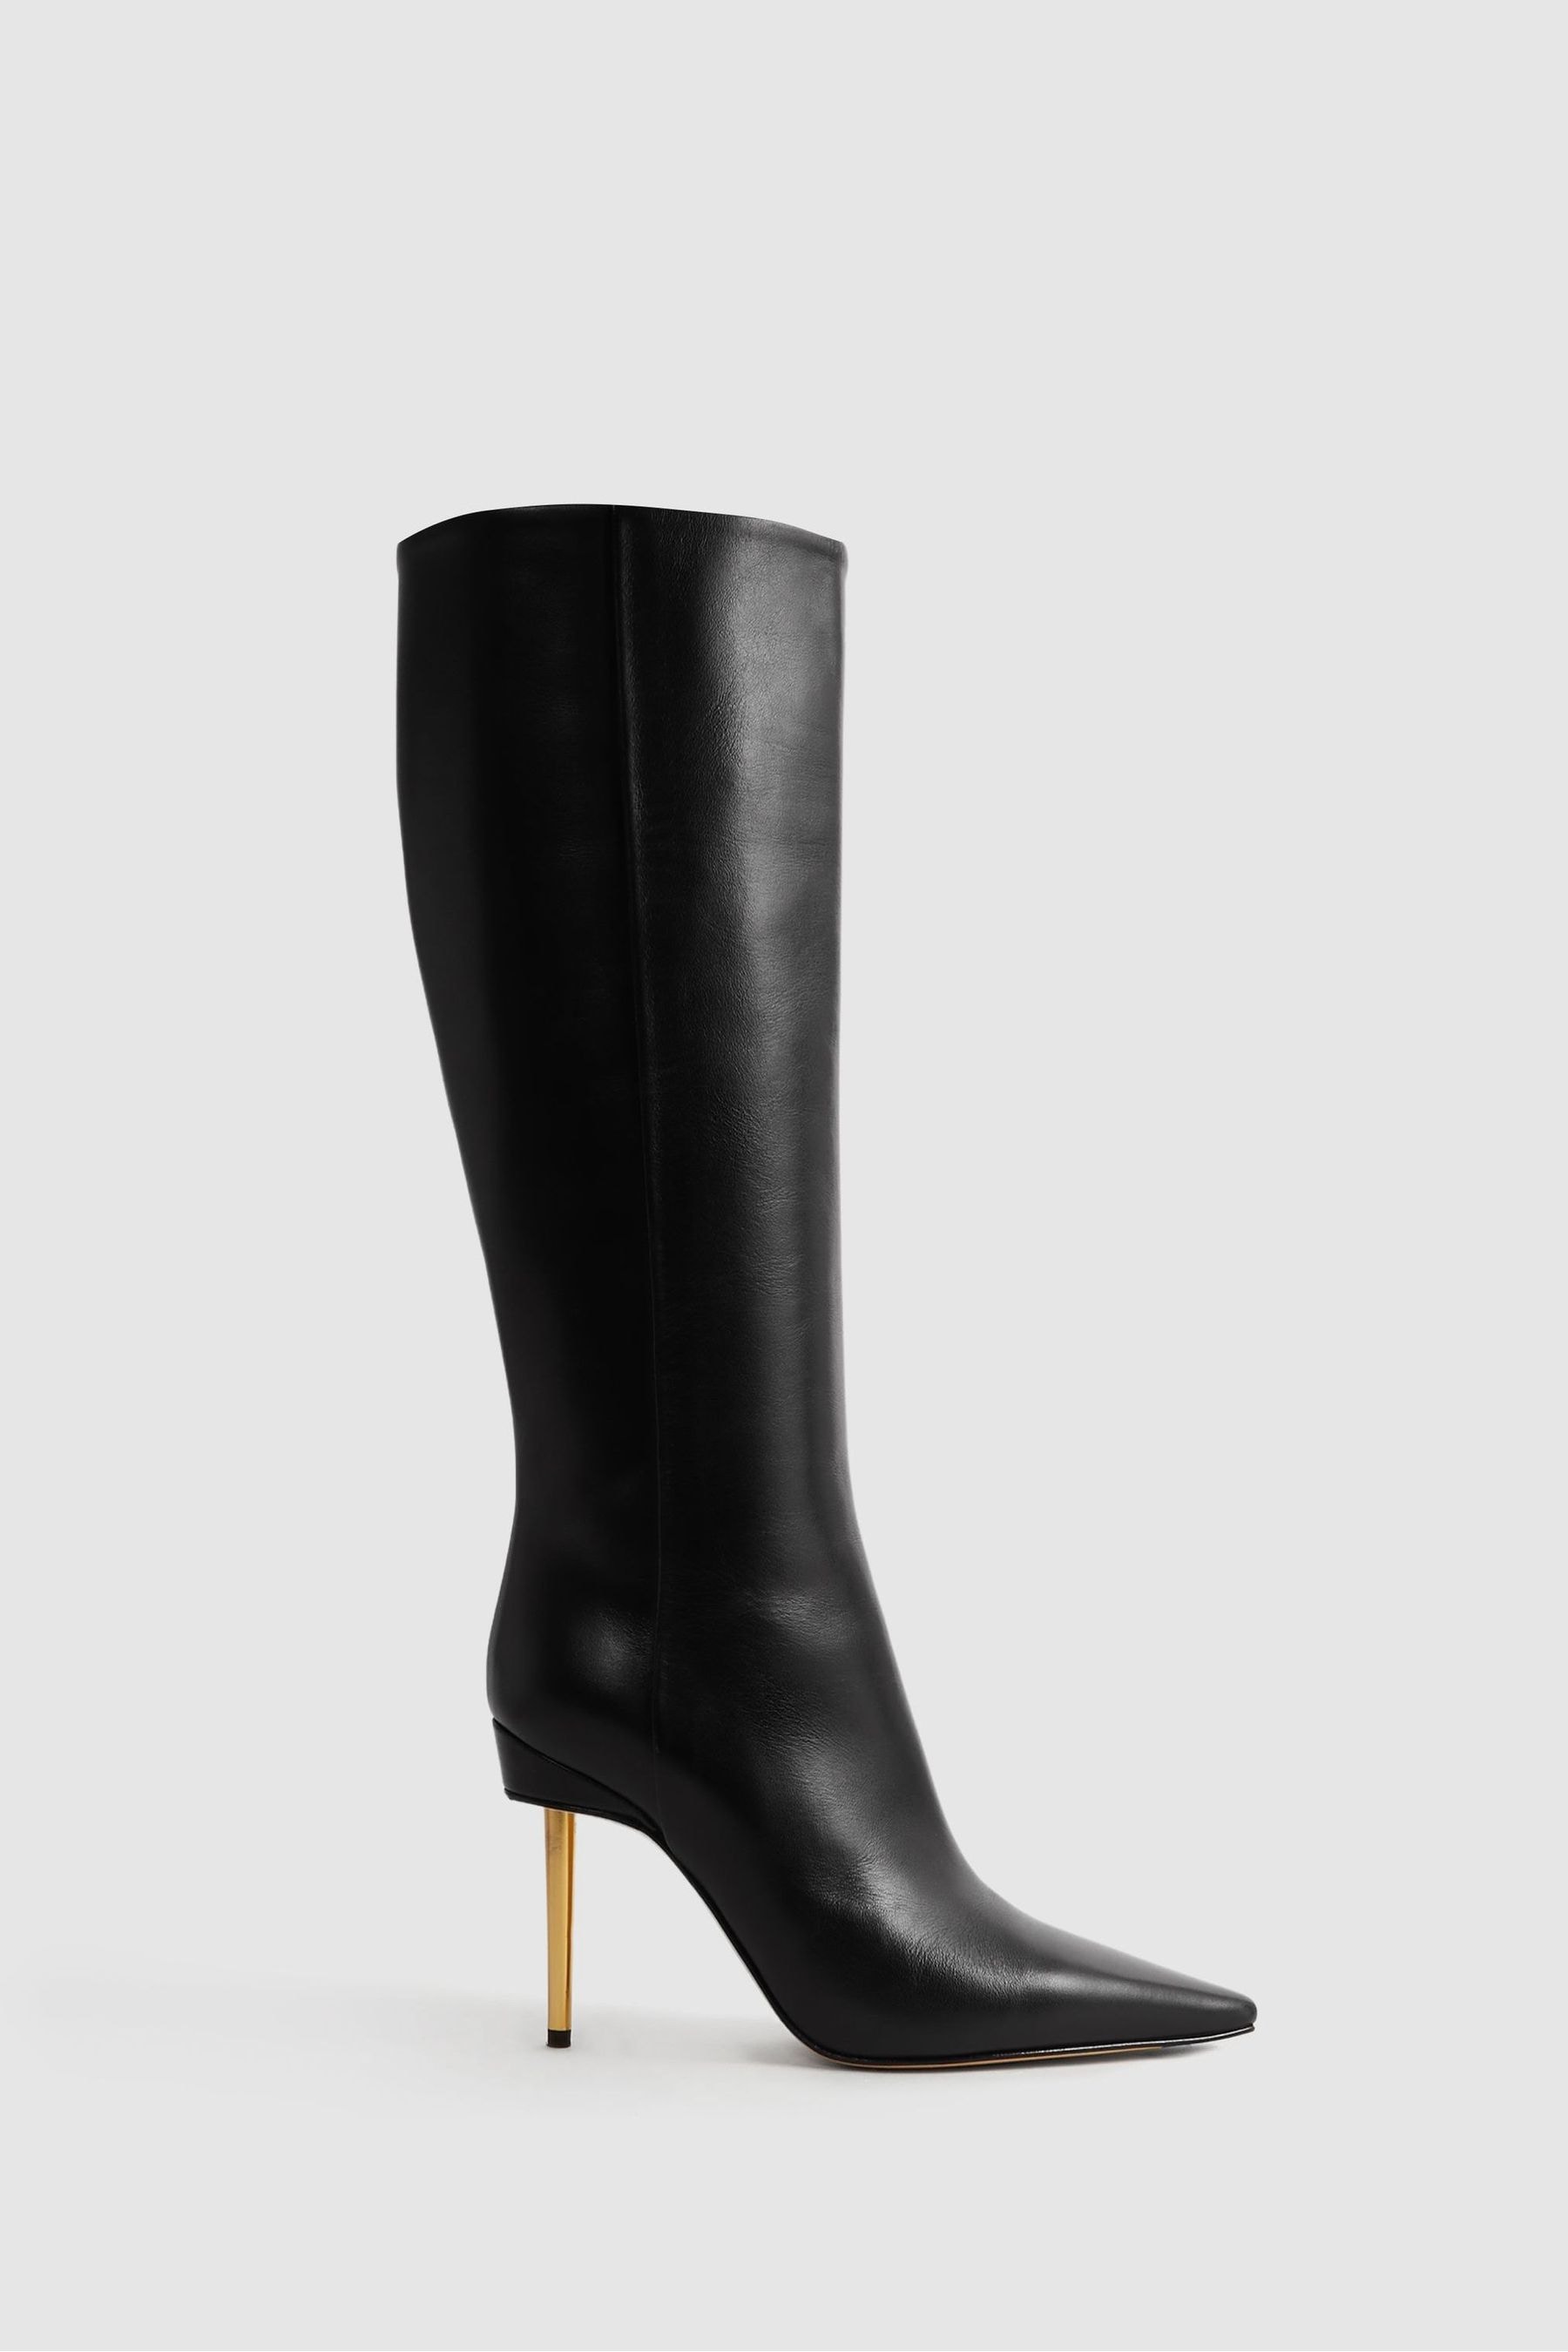 Reiss Naomi - Black Atelier Italian Leather Heeled Knee-high Boots, Uk 5 Eu 38